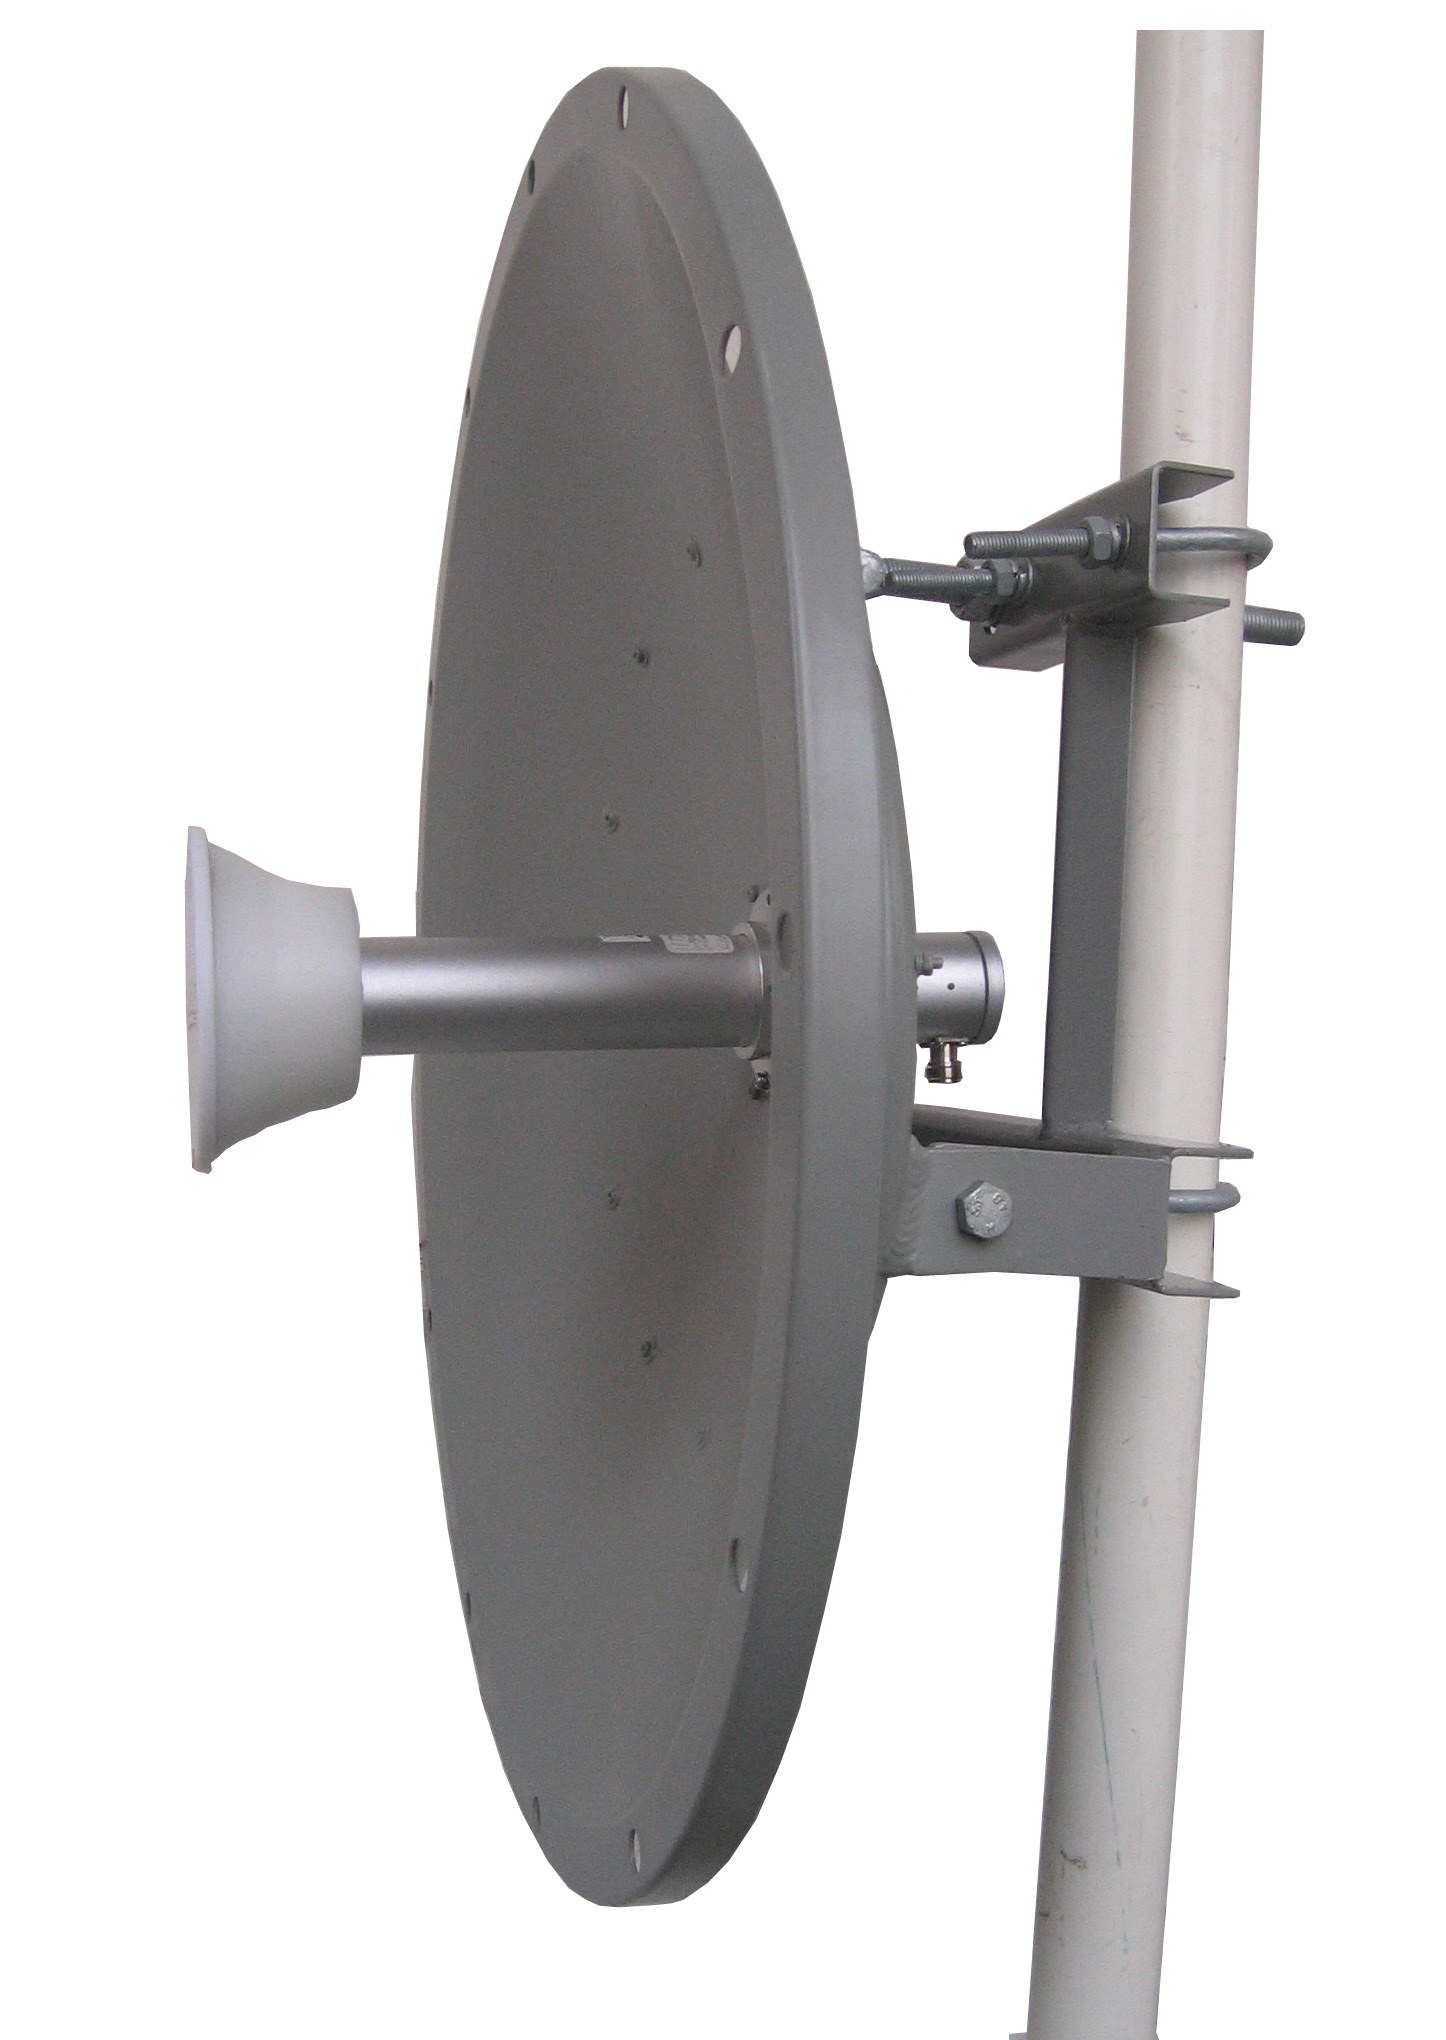 2.3-2.7GHz 30dBi Duap Pol Parabolic Antenna